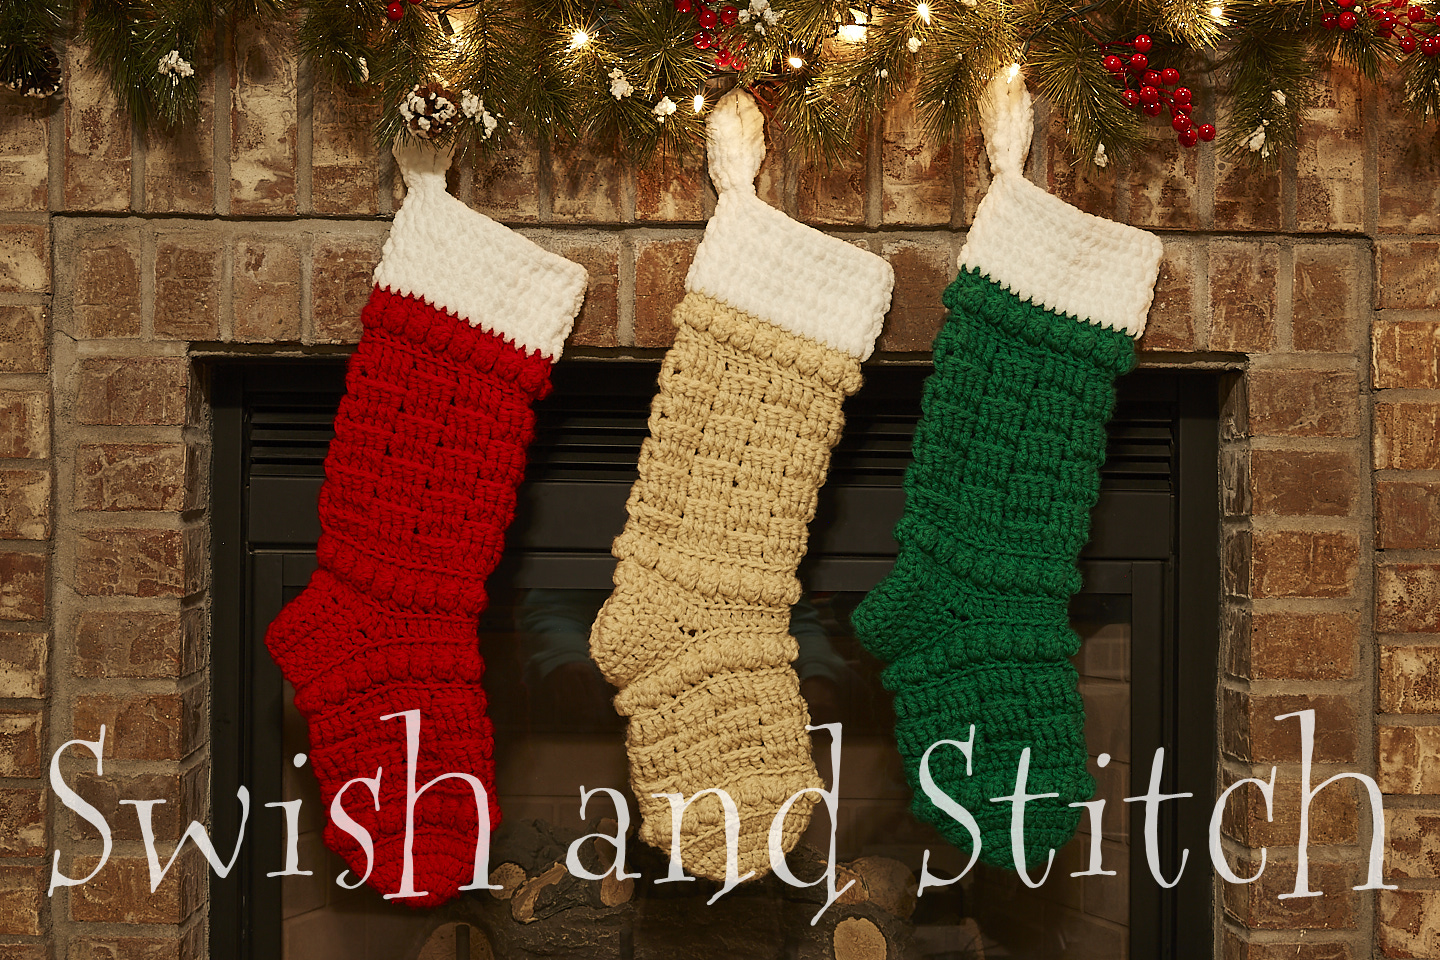 UPDATED** Crochet Christmas Stocking Pattern